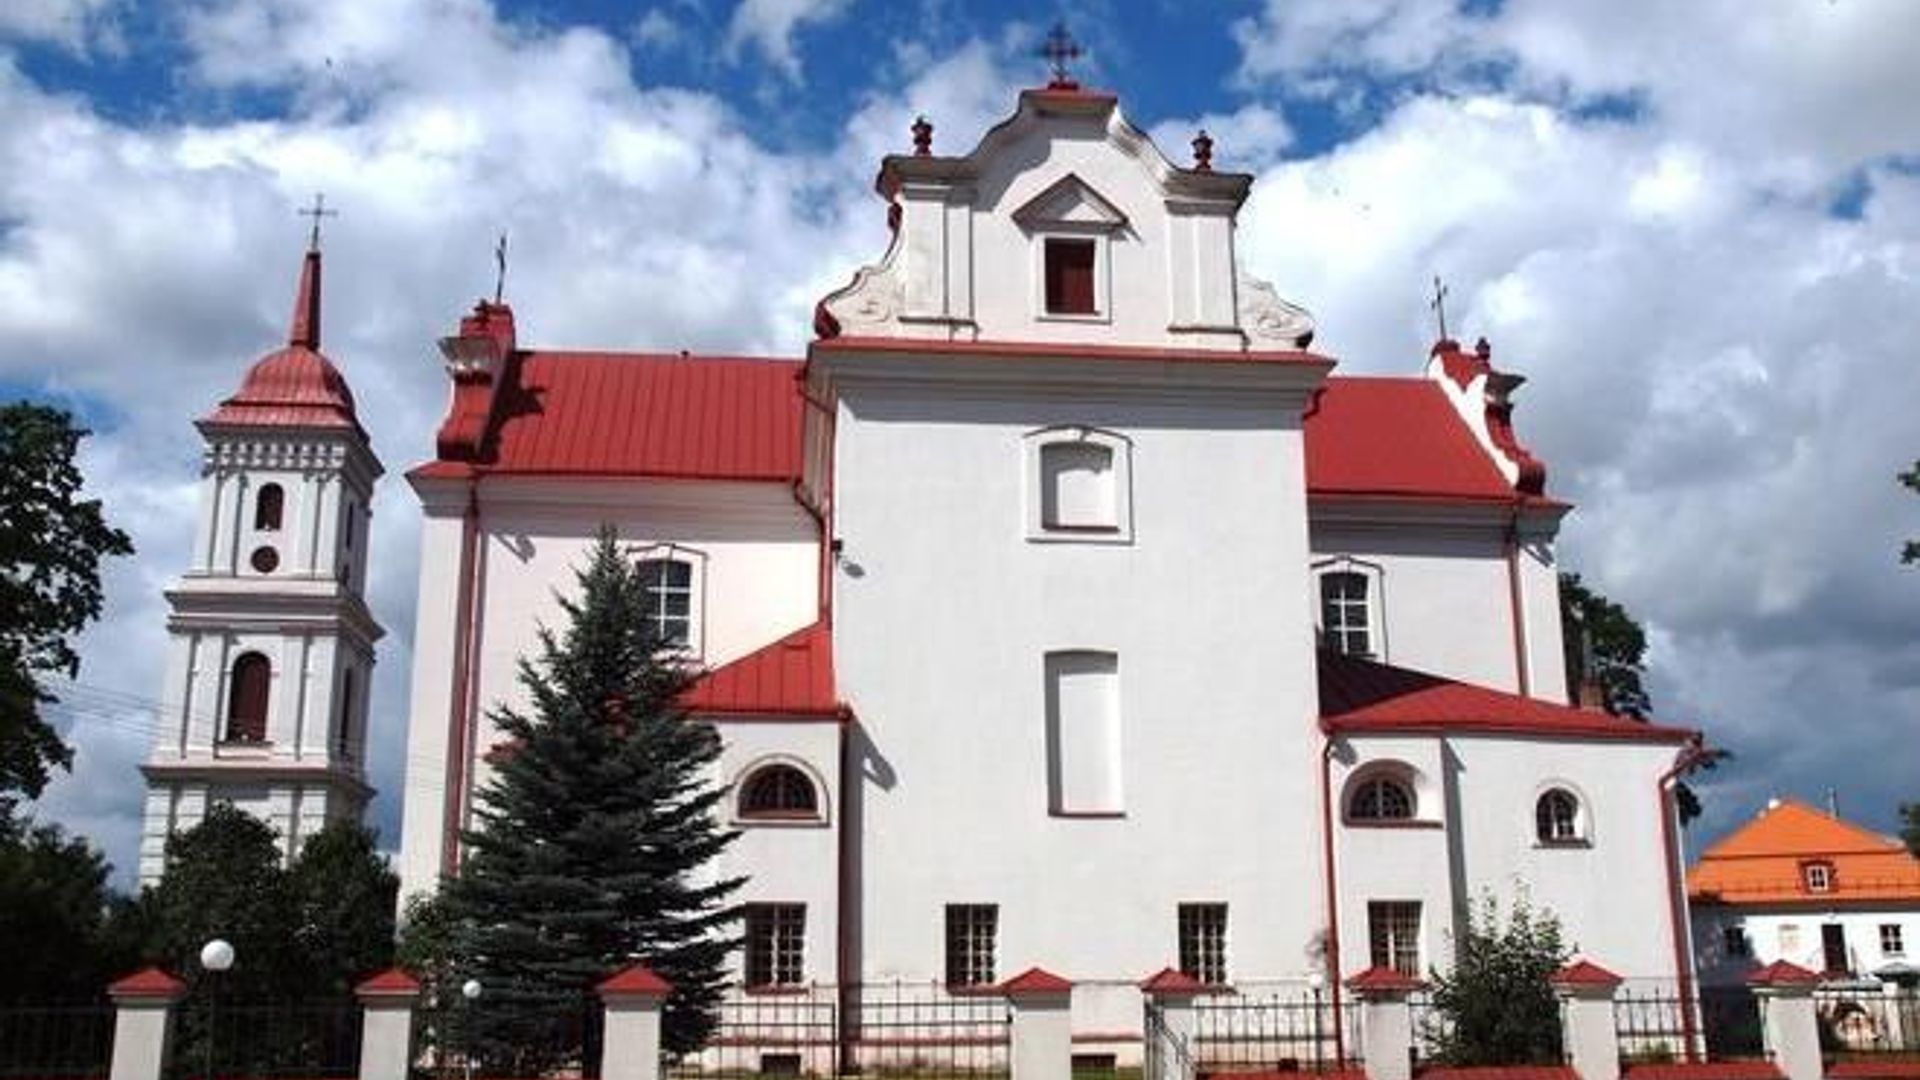 Troškūnai St. Trinity Church and Monastery